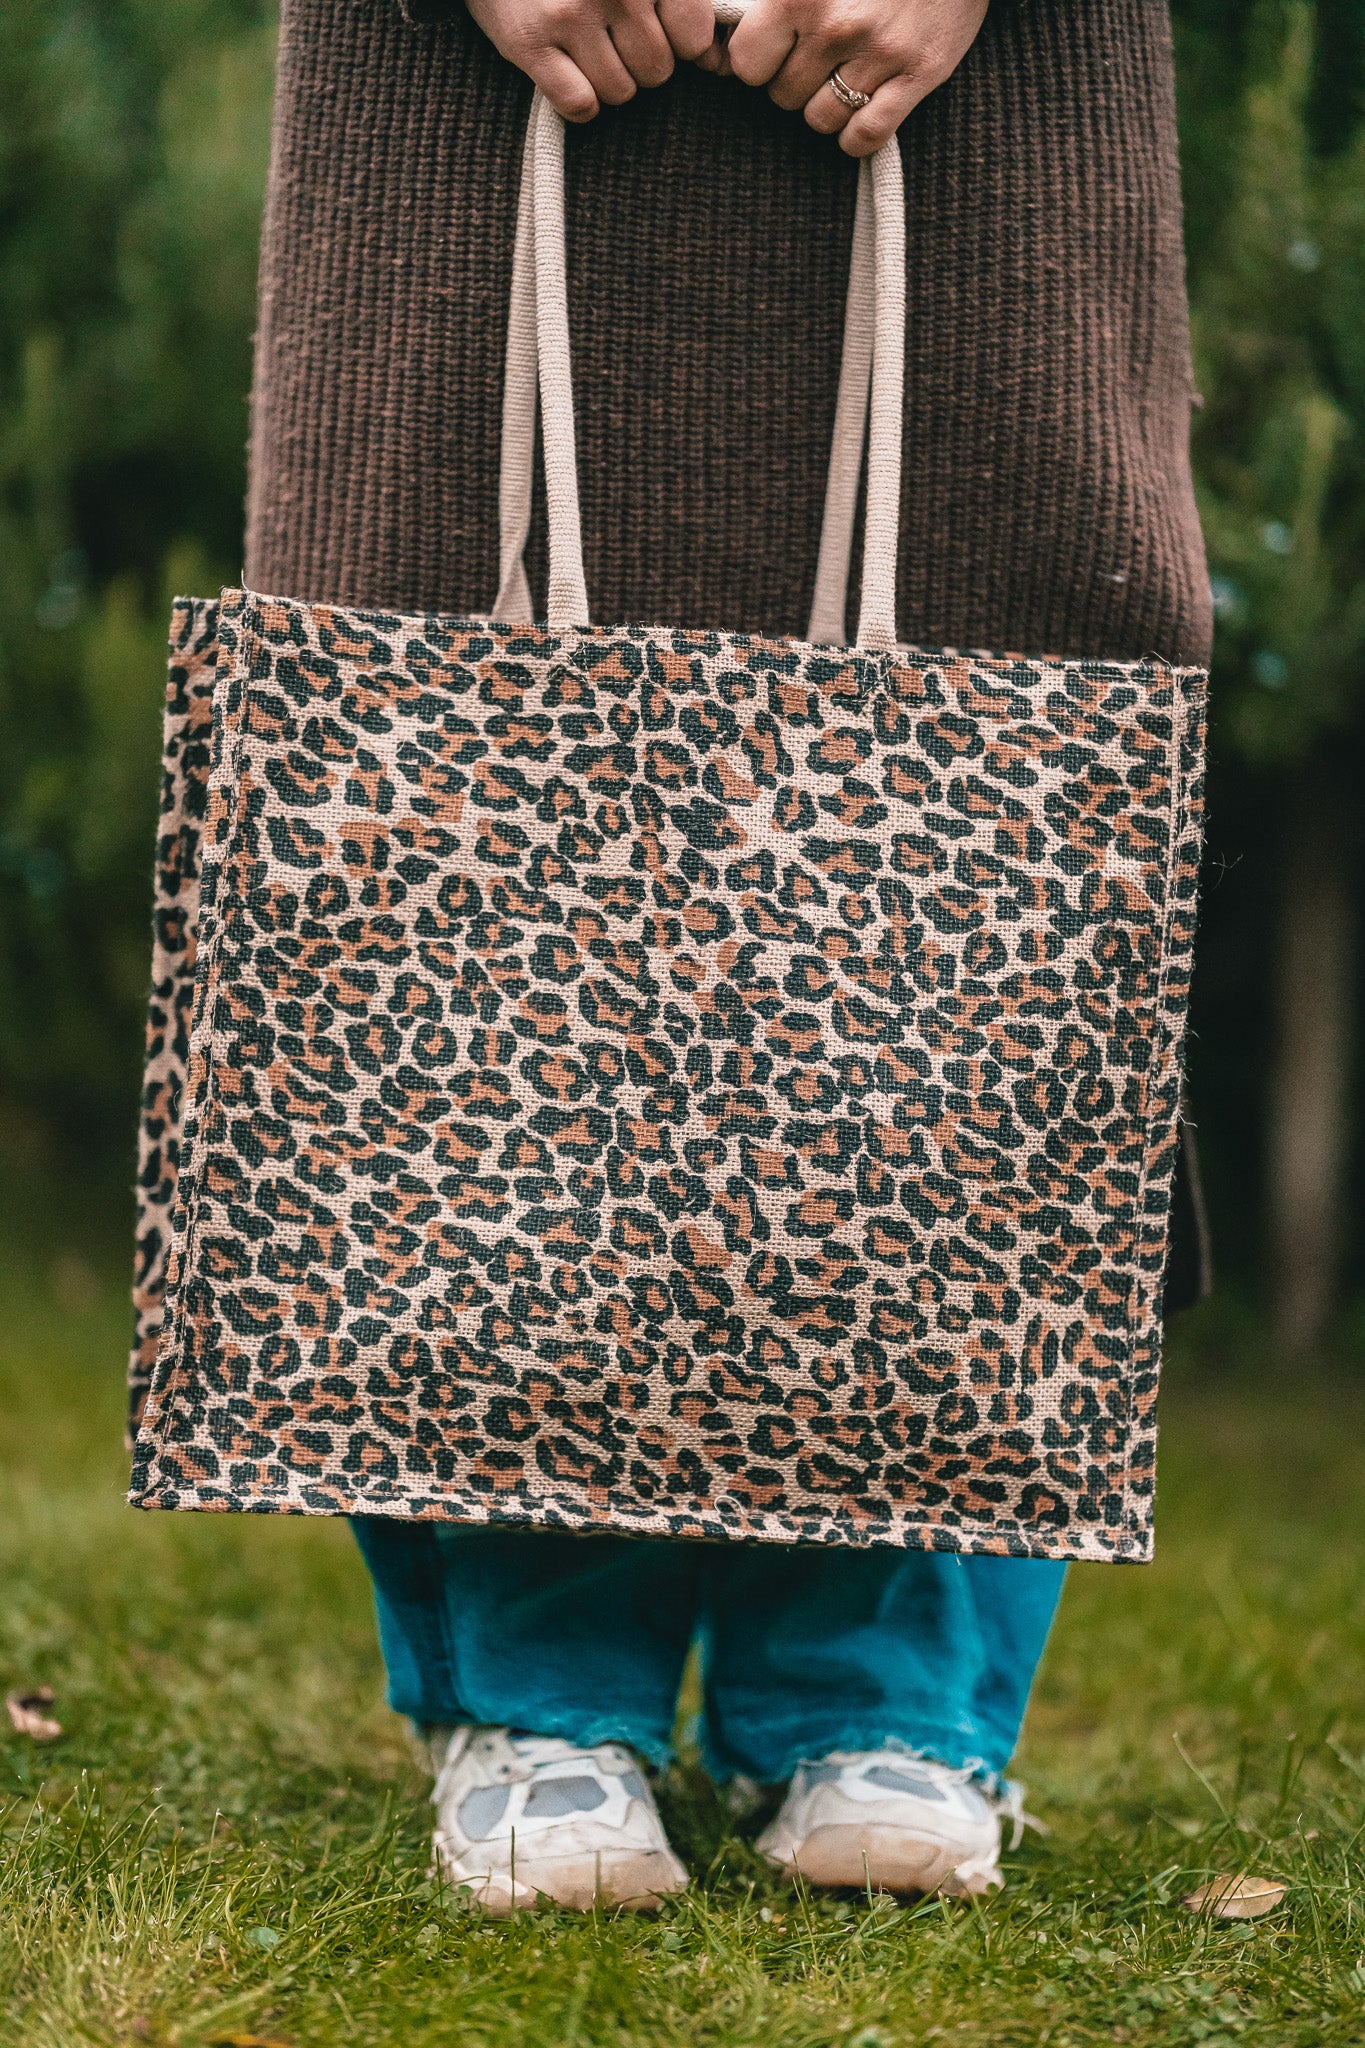 Paw Print Bag pattern by Jo Edwards - Ravelry